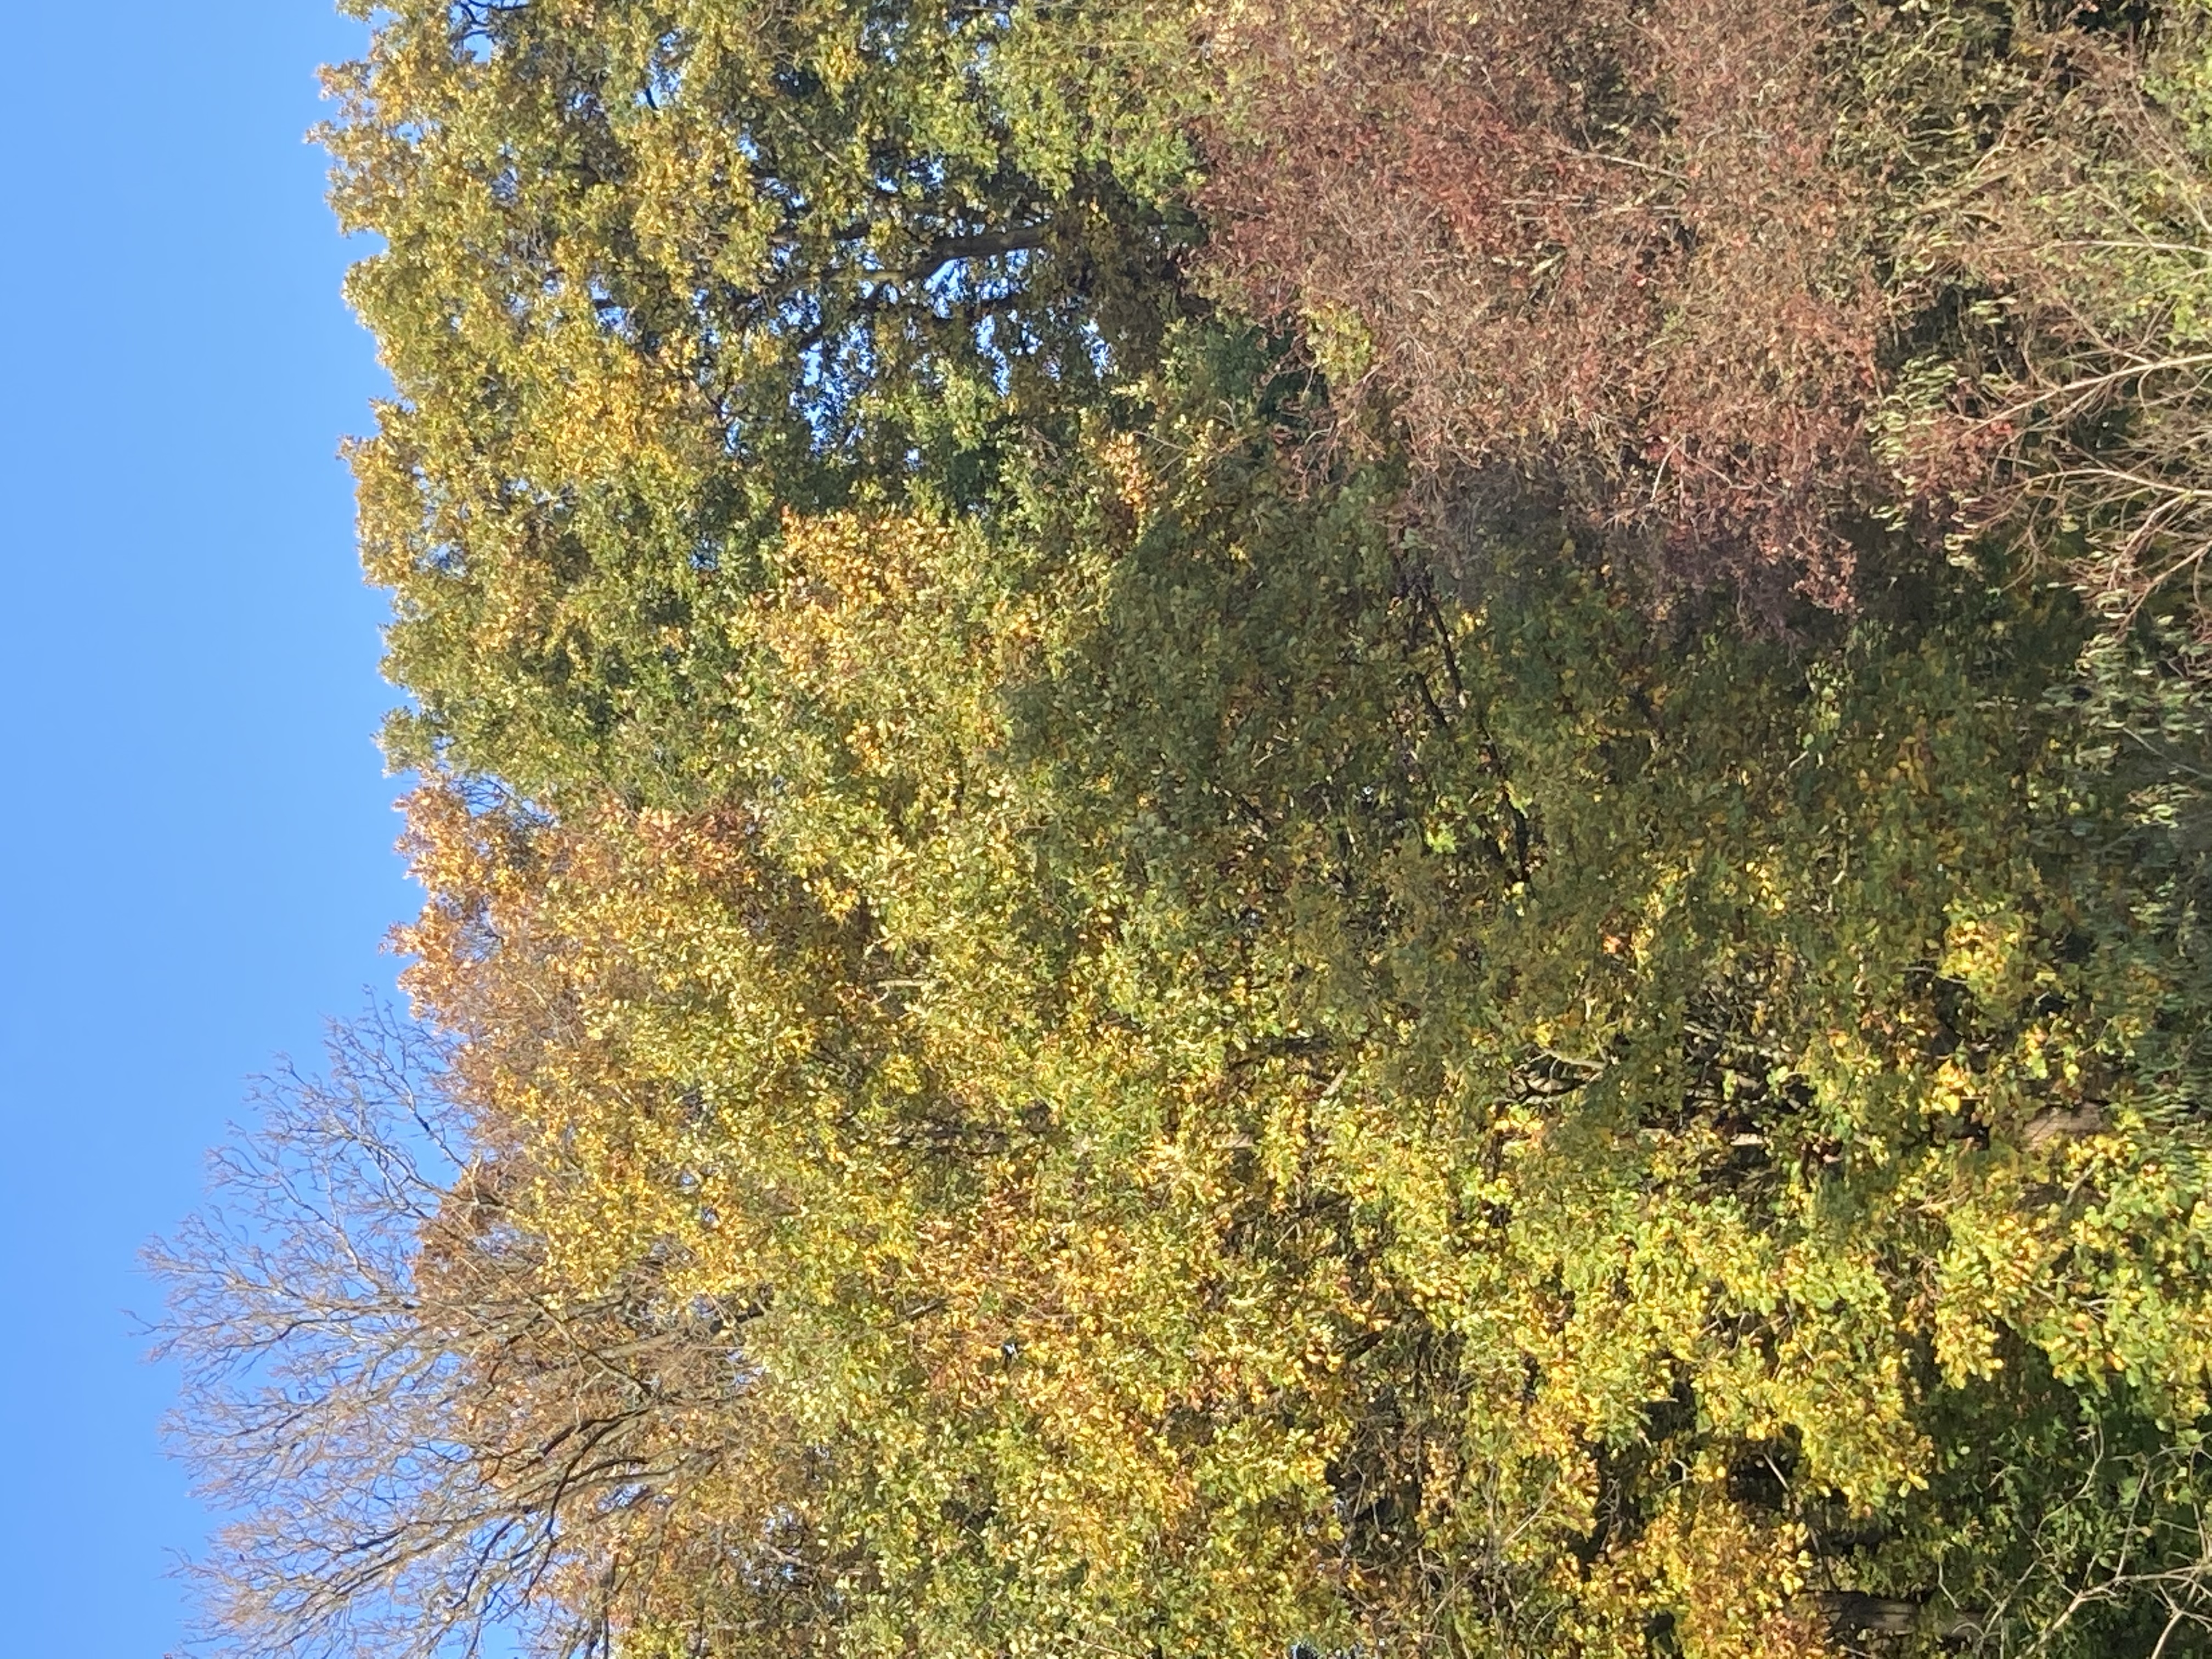 arbres en automne vus de la fenêtre